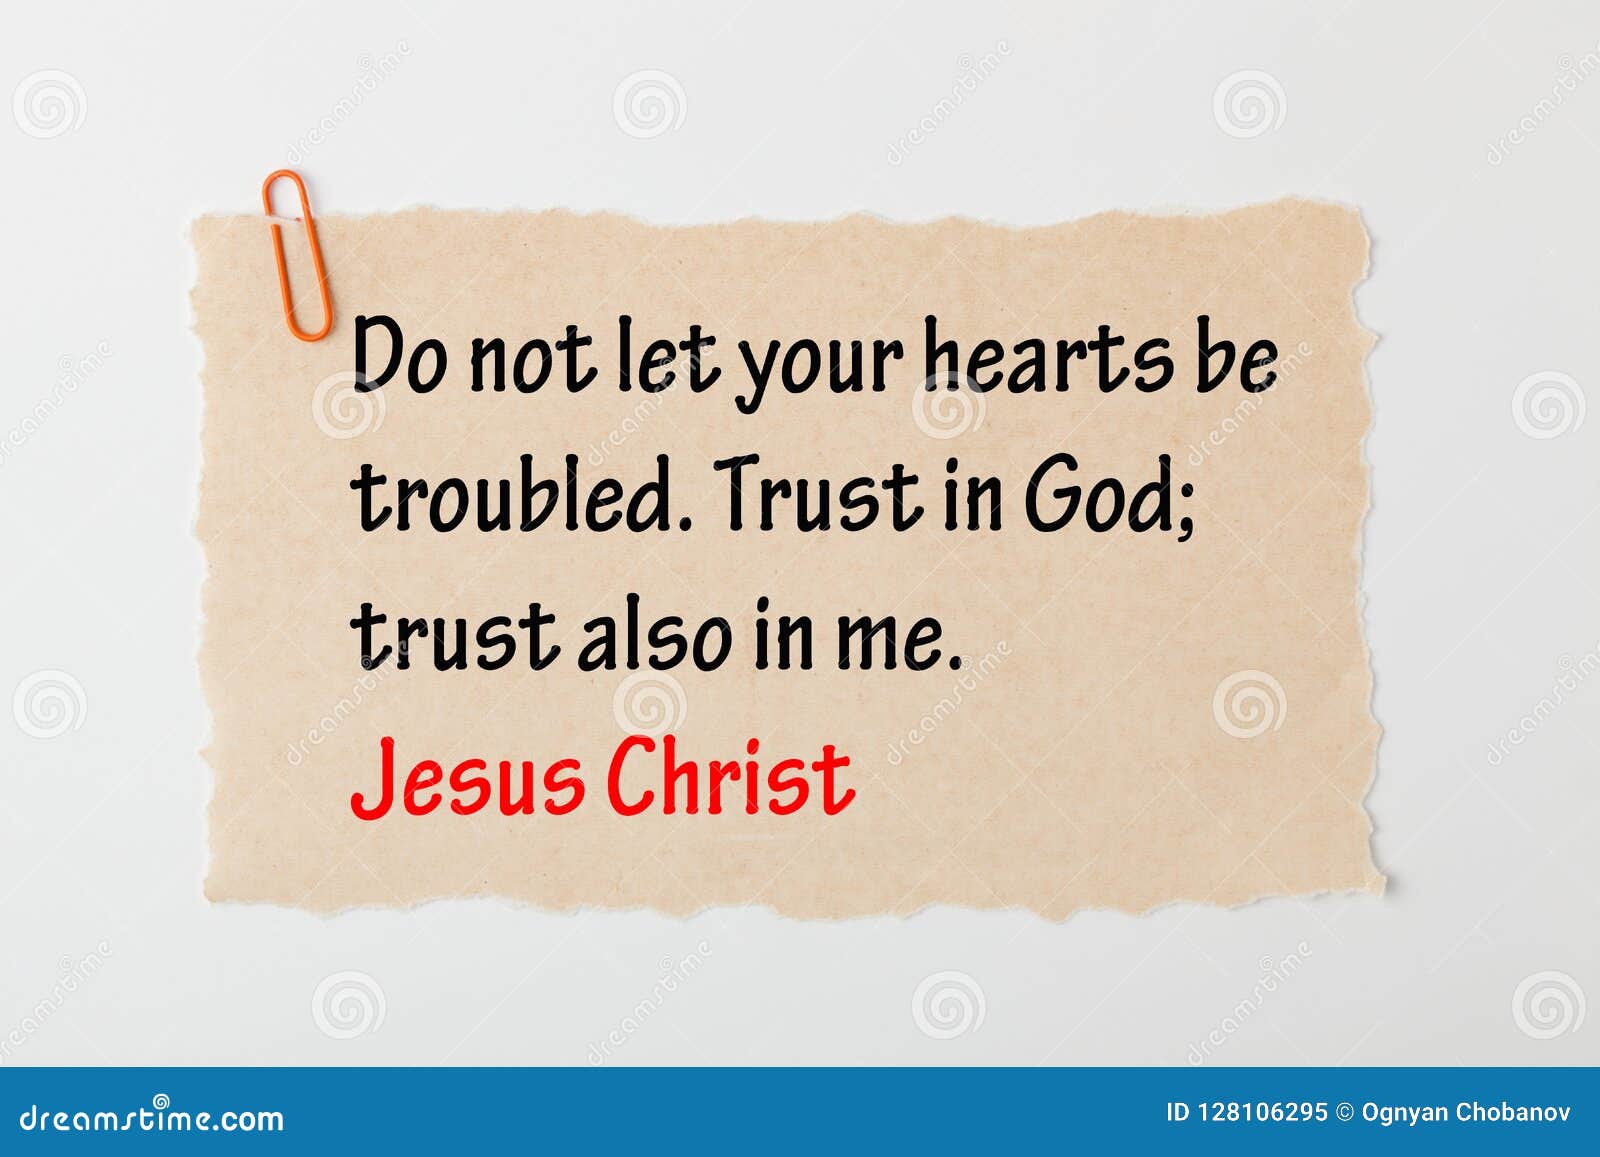 trust in god